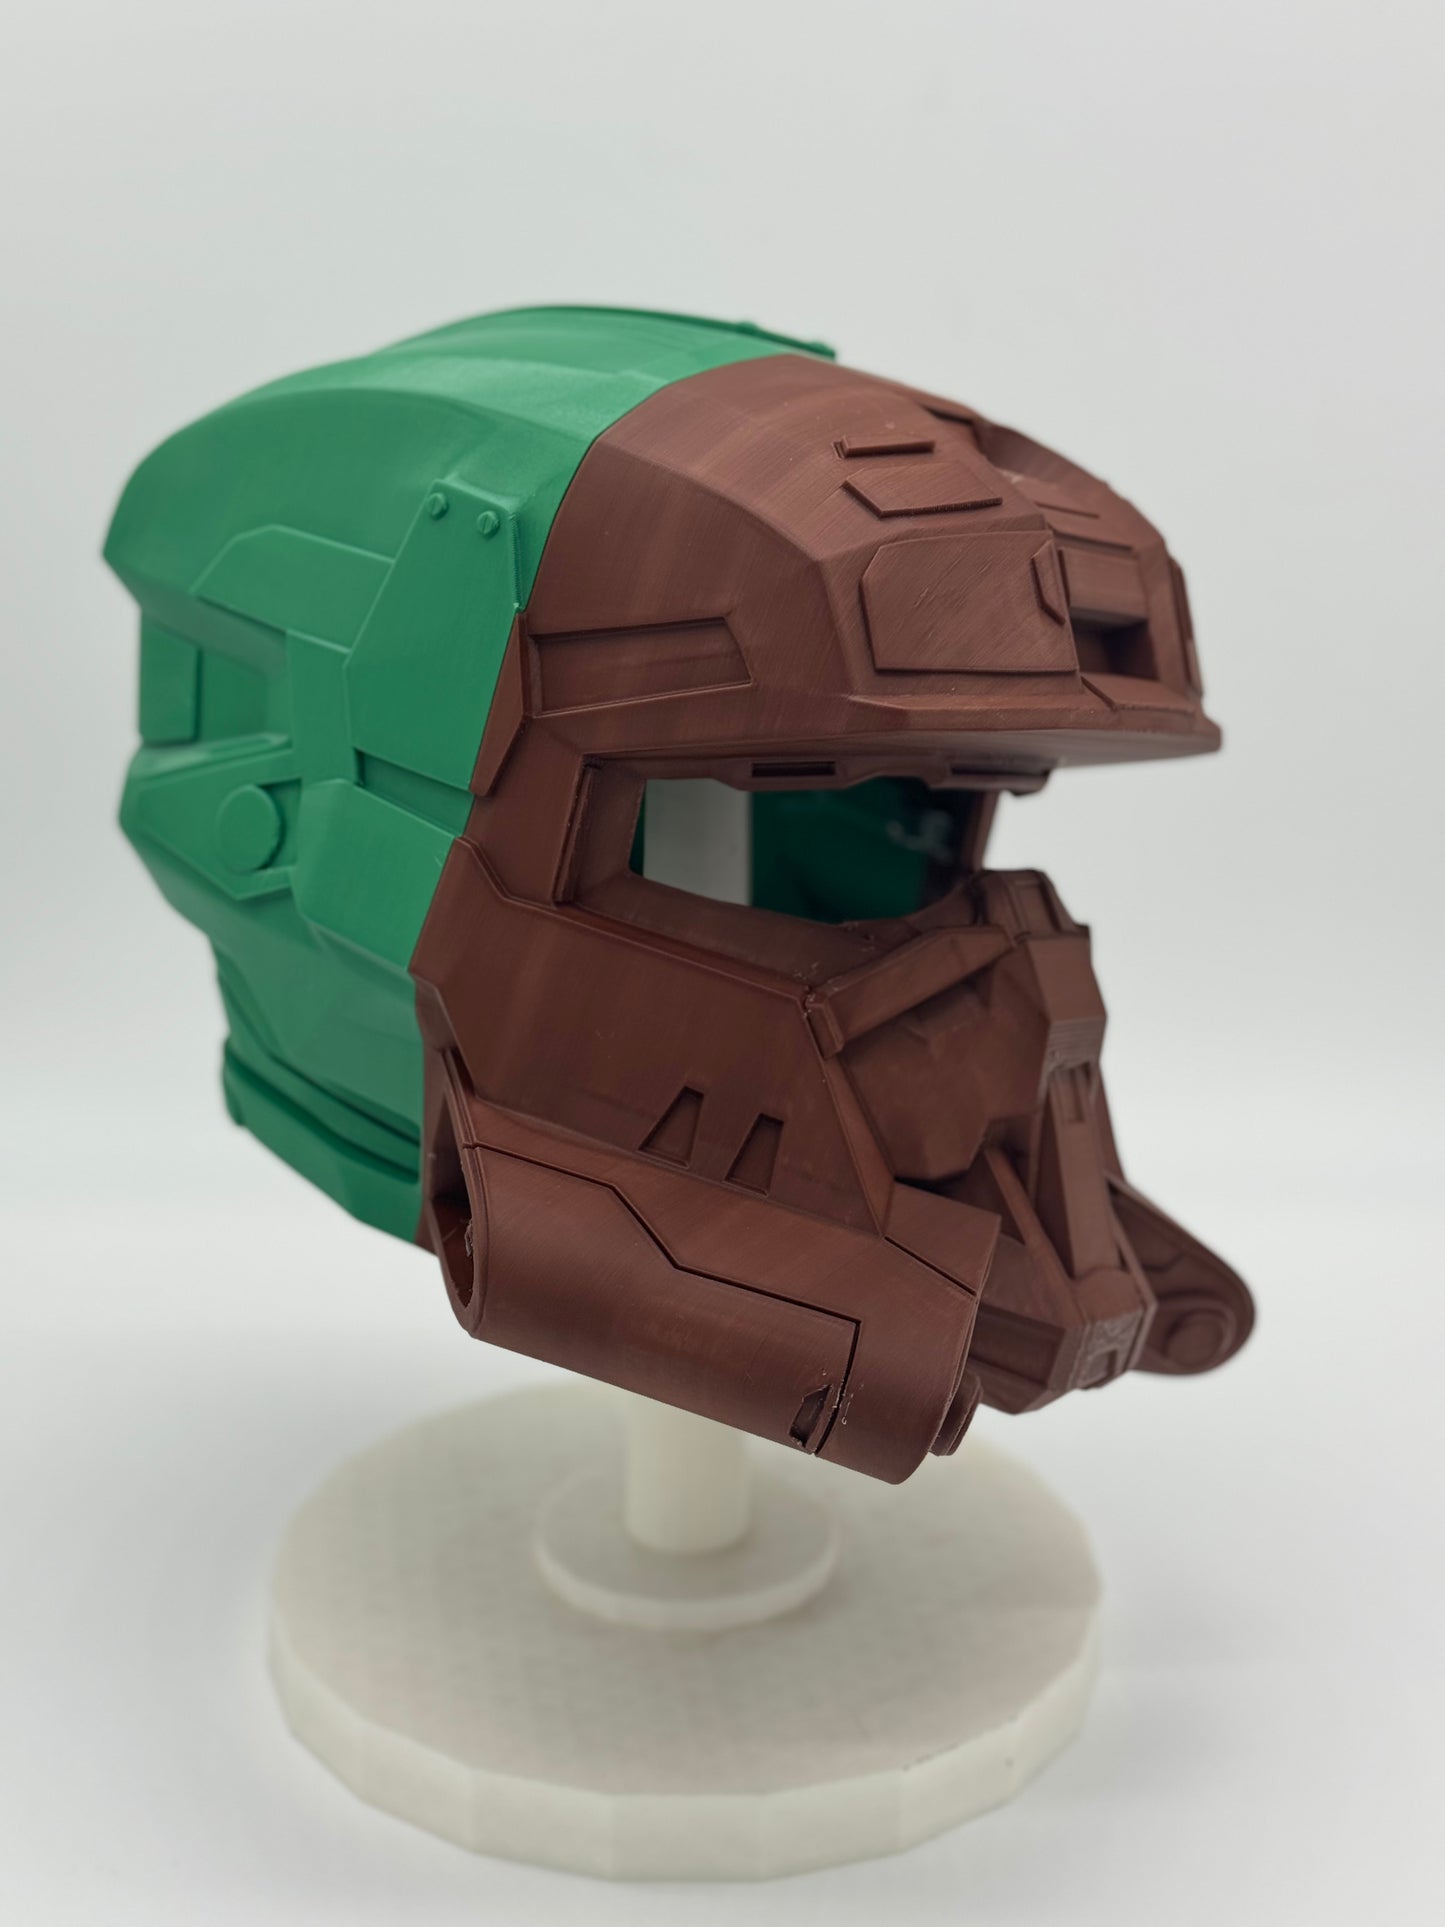 Halo Infinite EoD Cosplay Helmet